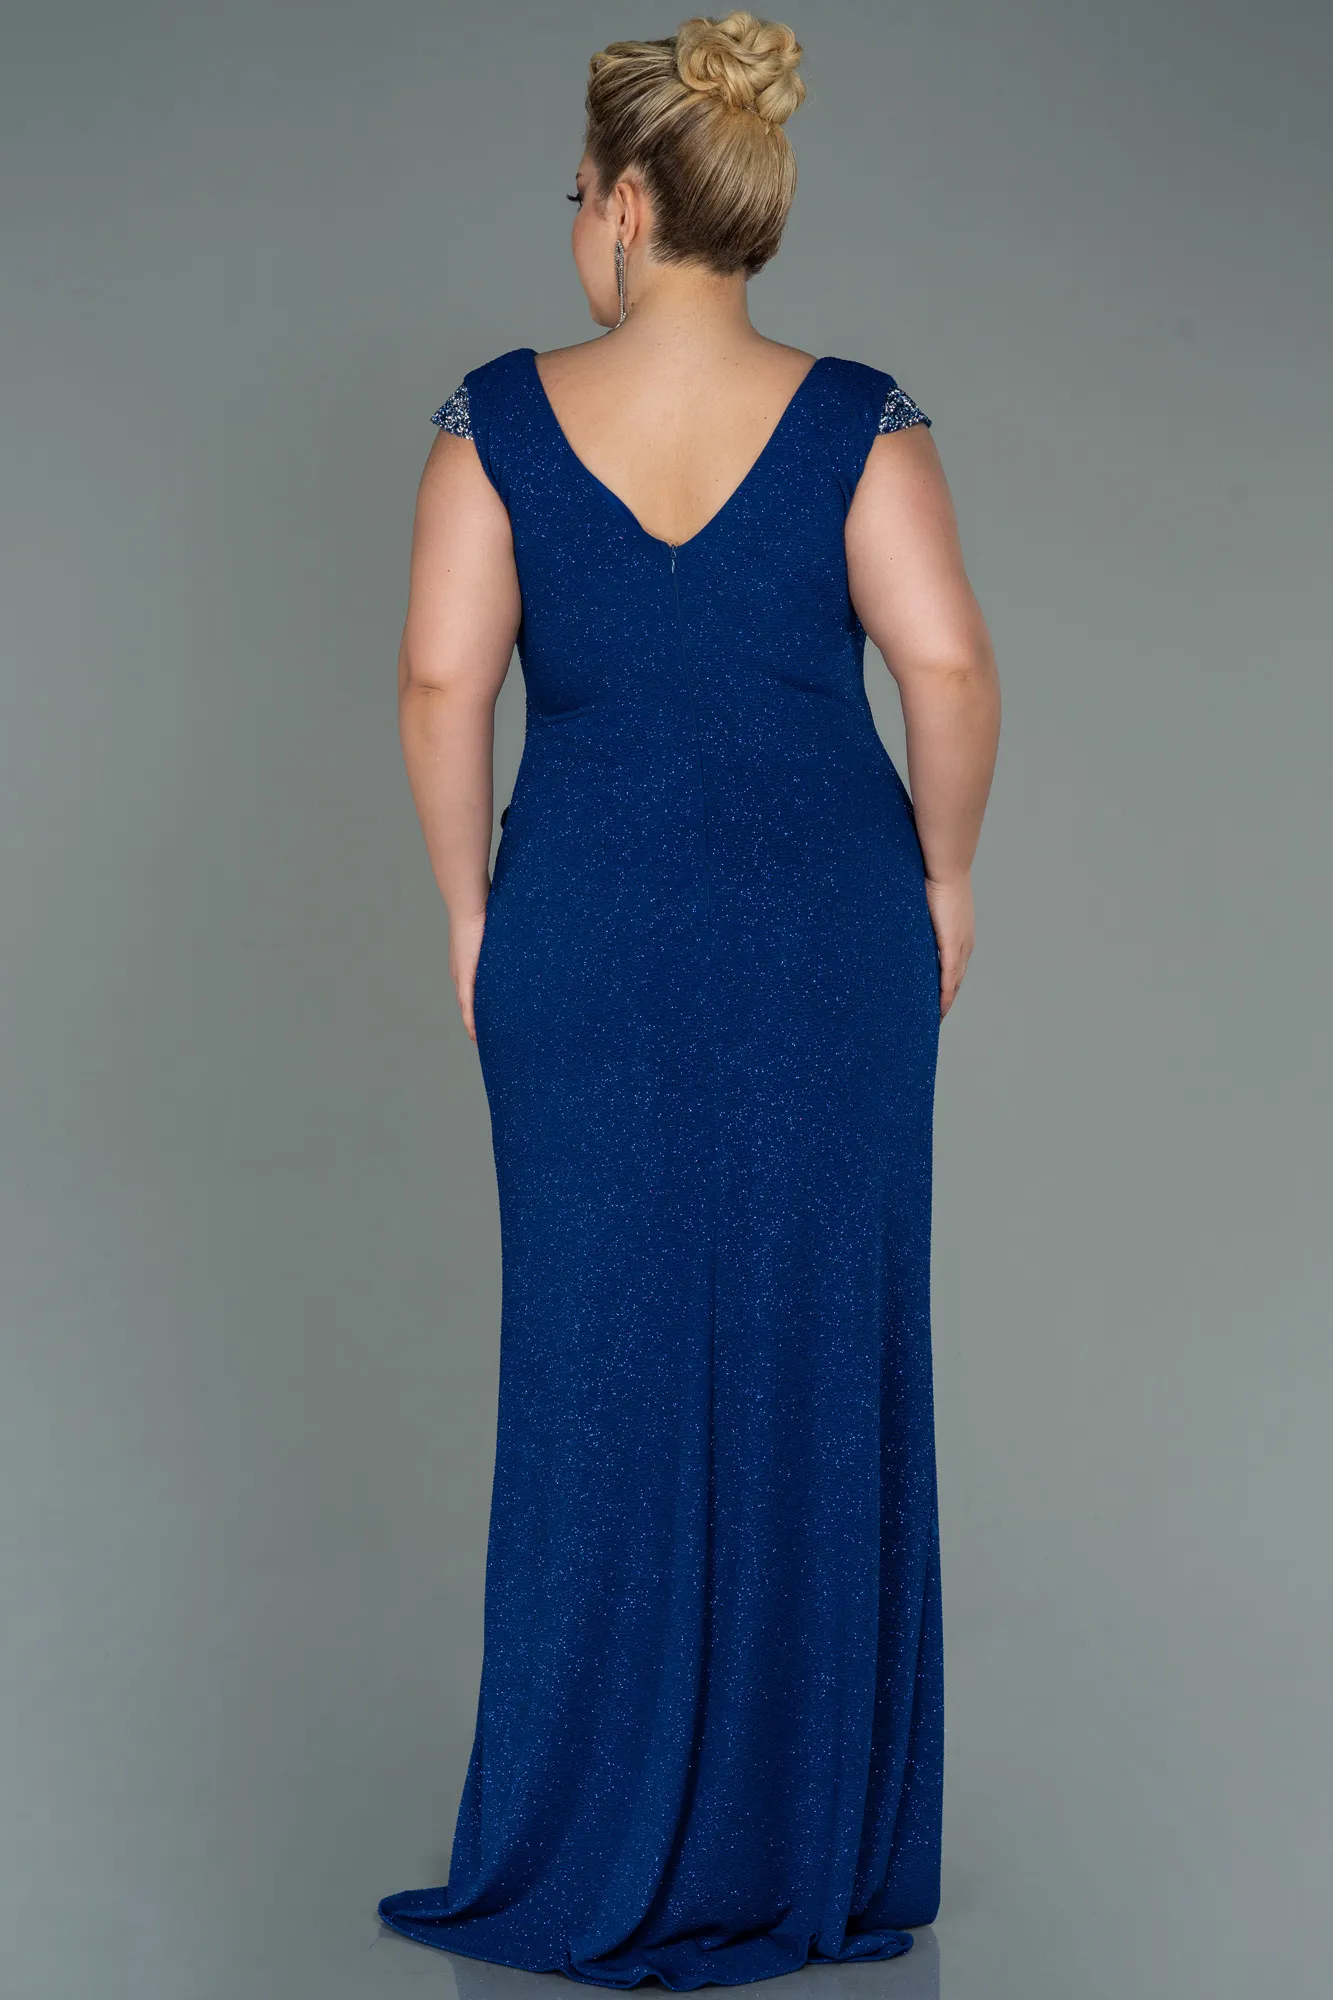 Sax Blue-Long Plus Size Evening Dress ABU2438